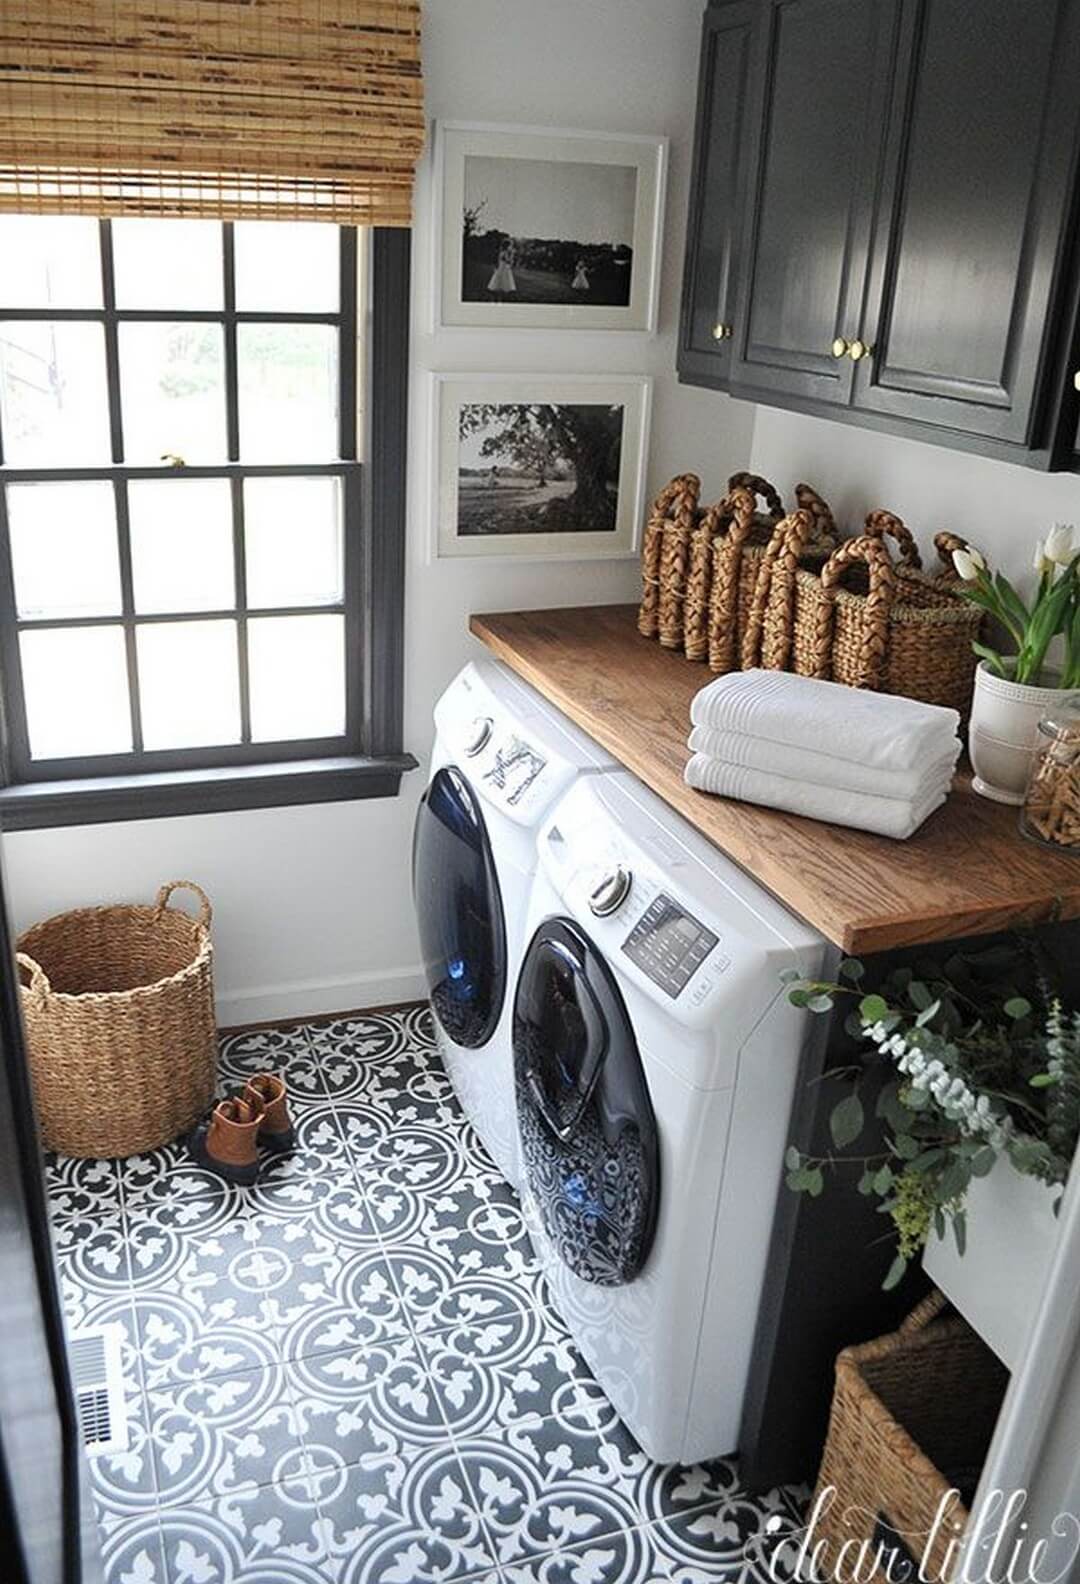 07 small laundry room design ideas homebnc.jpg